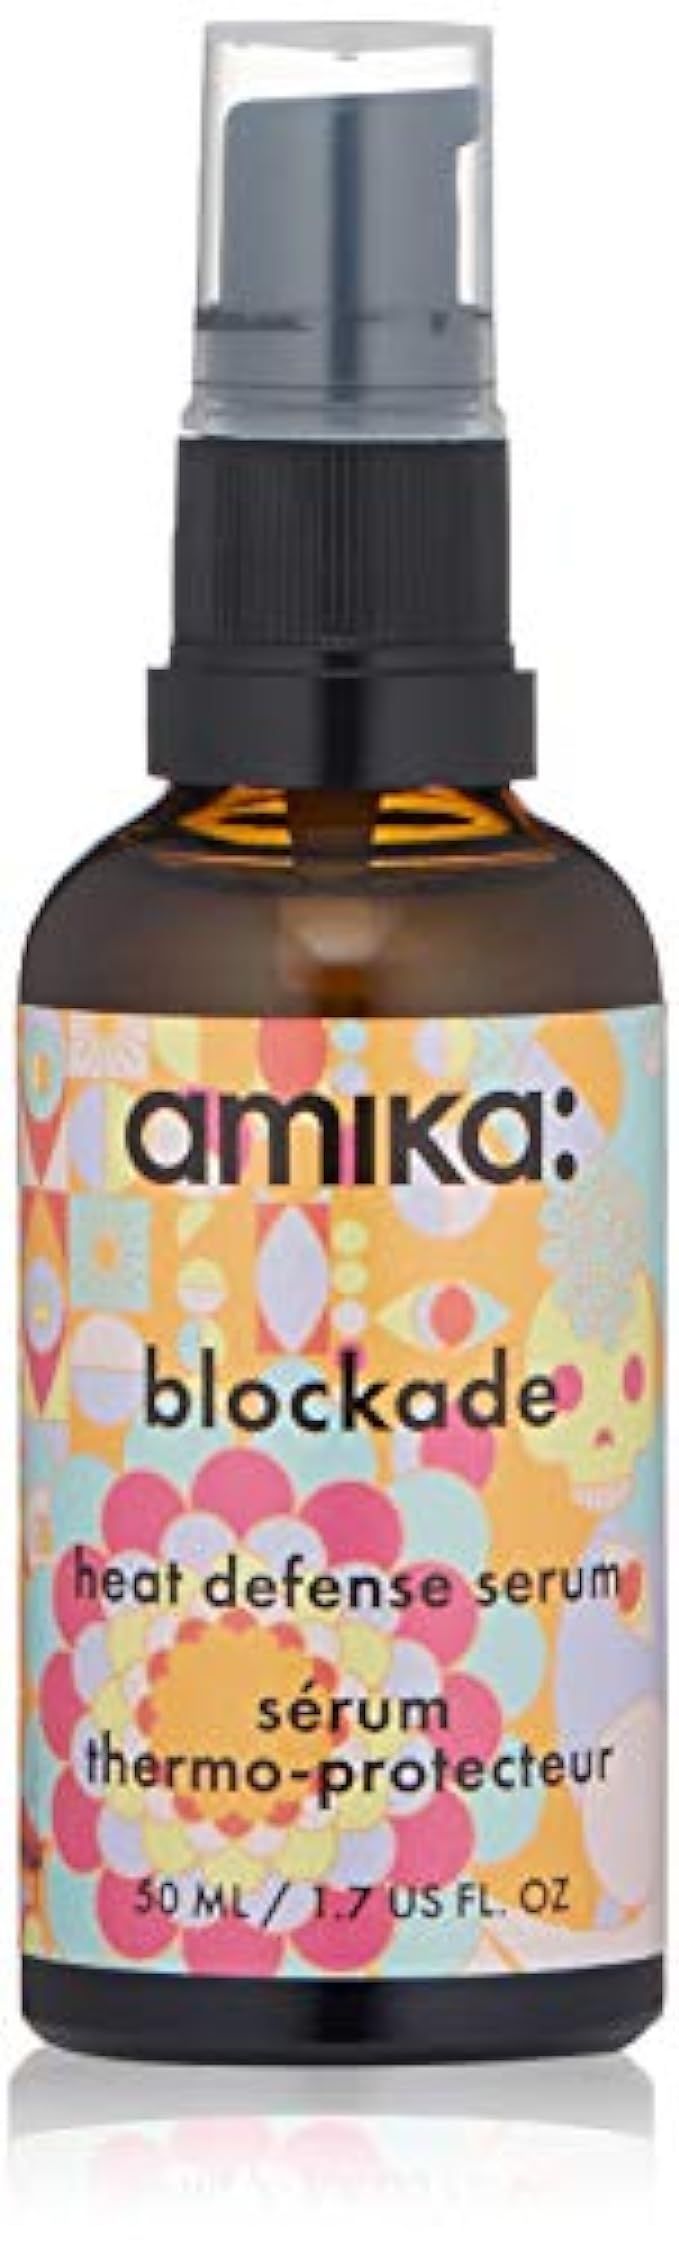 amika Blockade Heat Defense Serum, 1.7 oz. | Amazon (US)